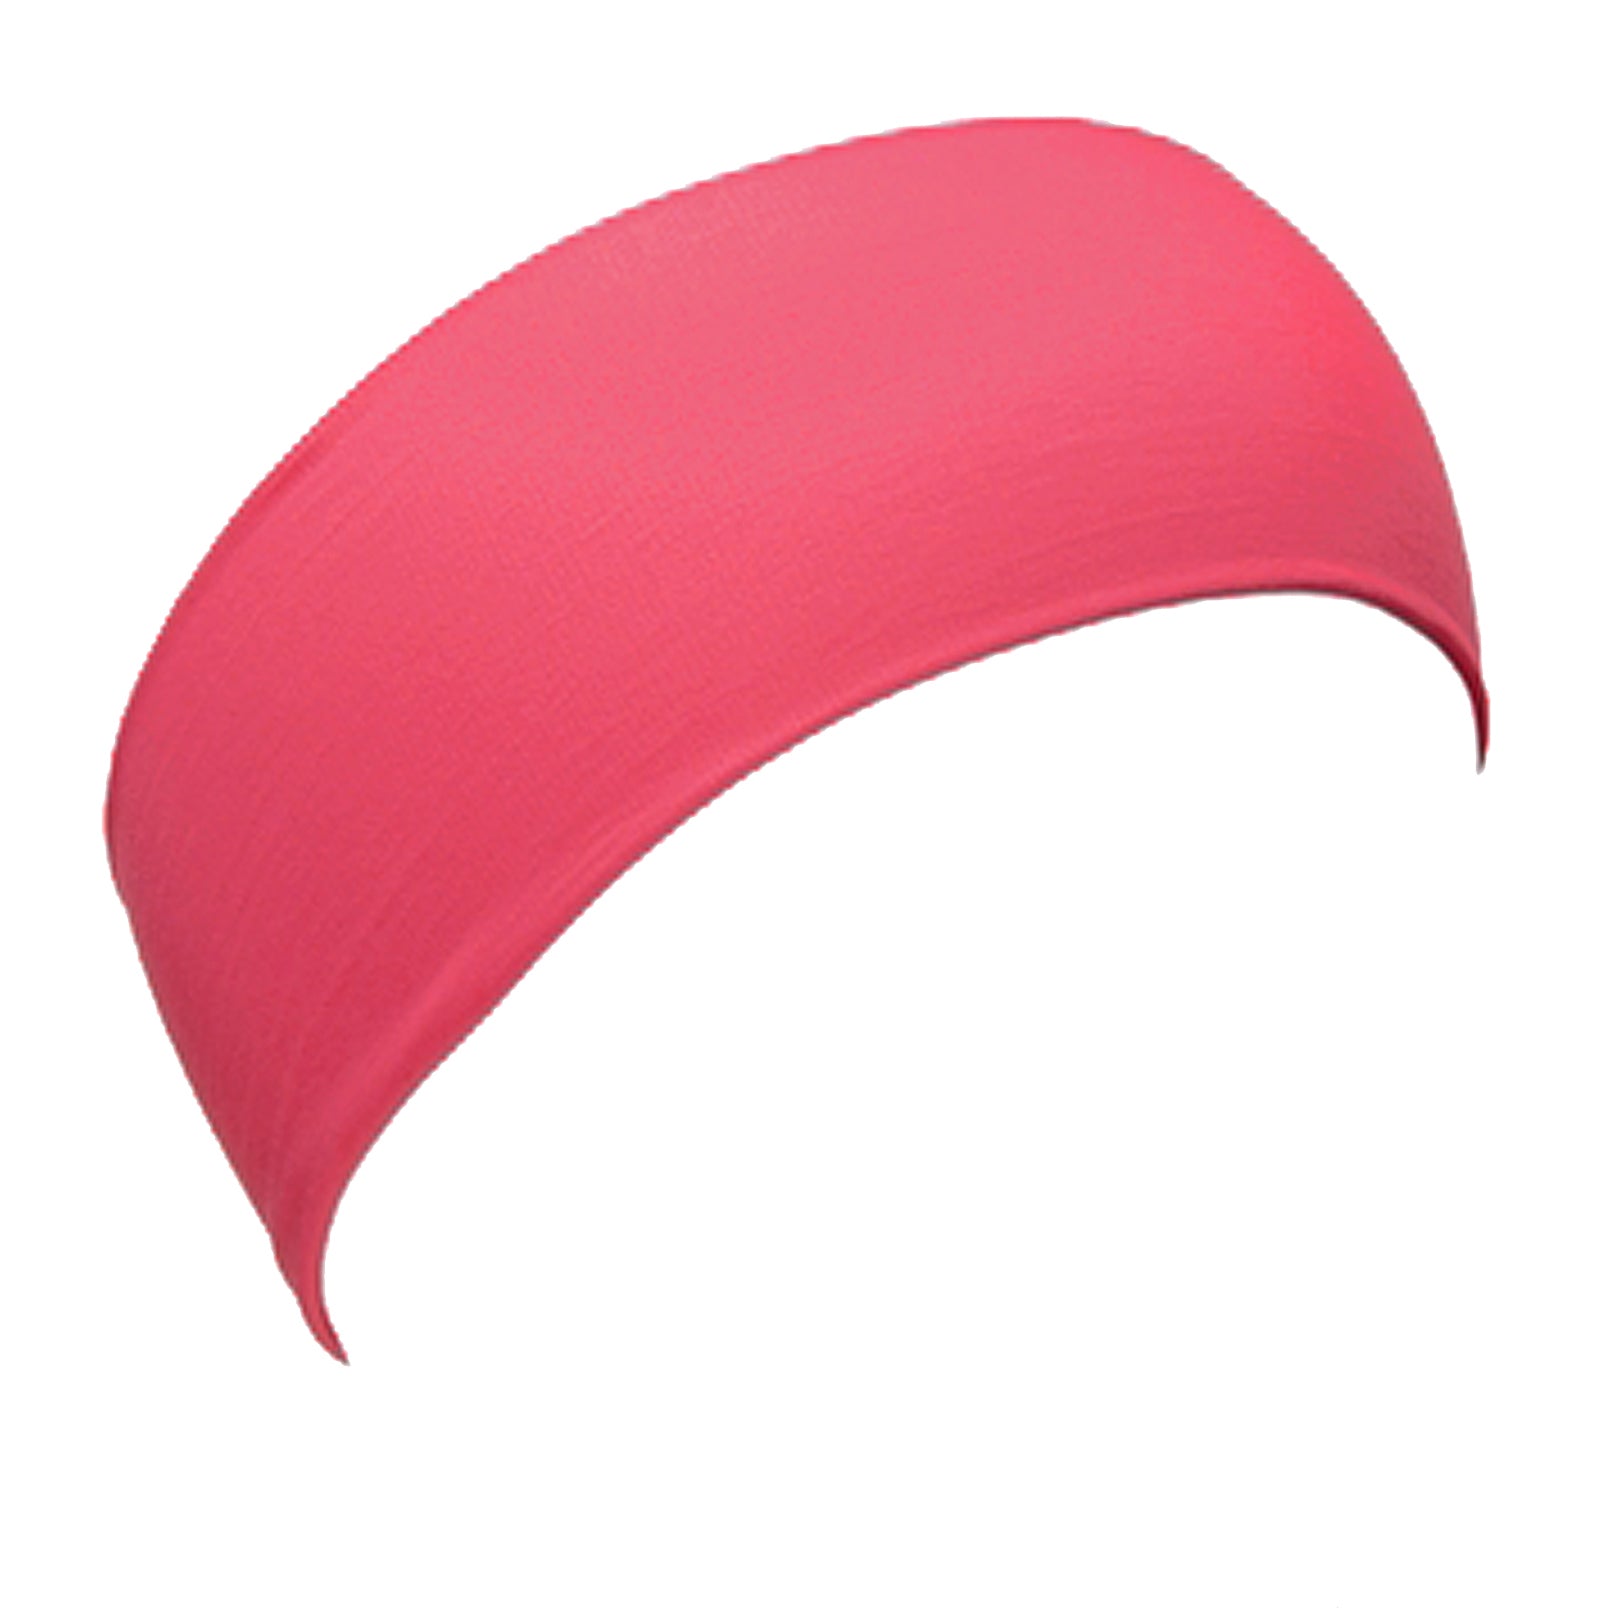 L. Erickson Italian Bandeau Stretch Headband in Bright Guava Pink